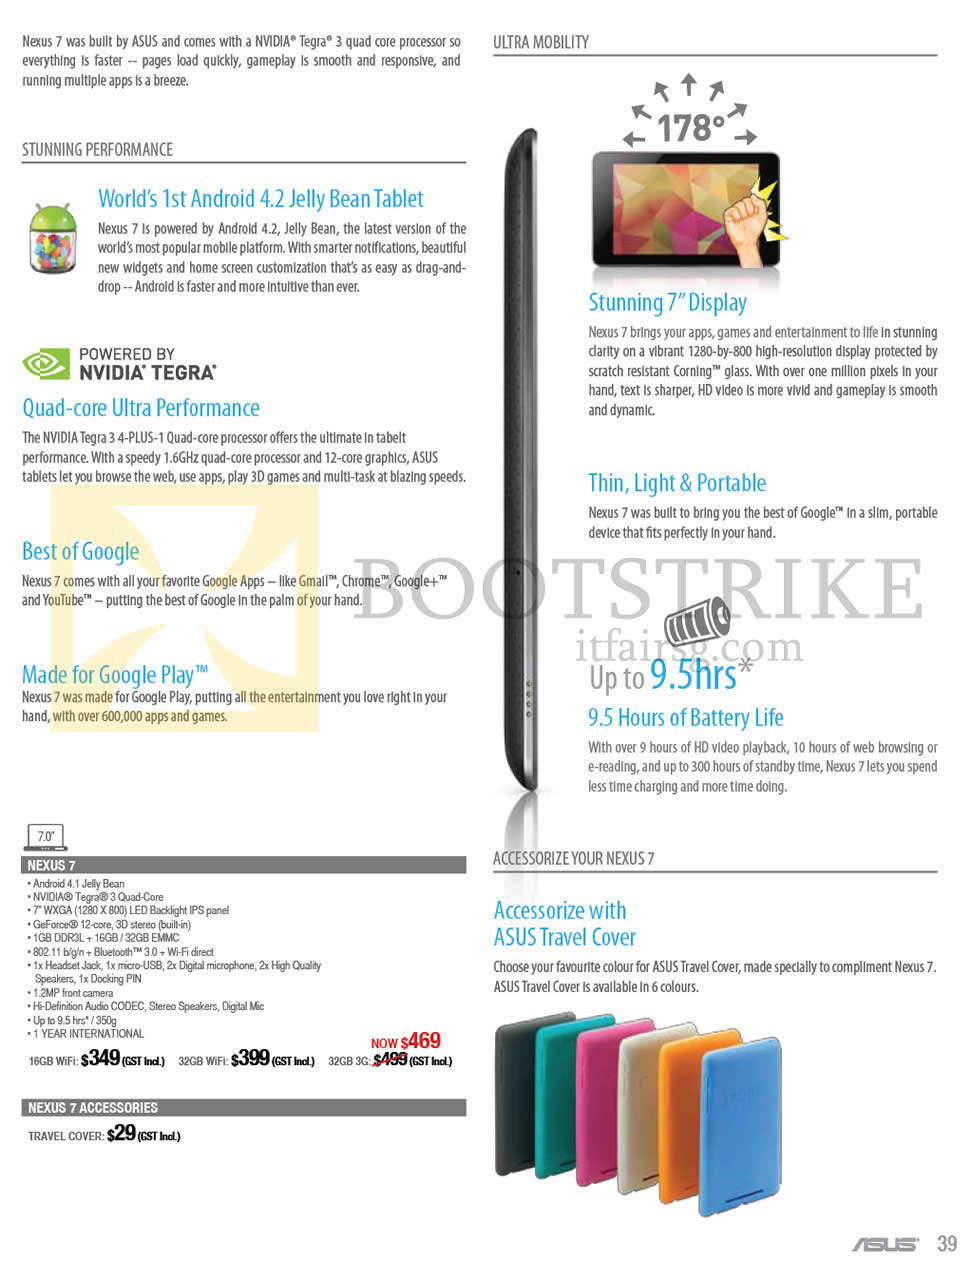 IT SHOW 2013 price list image brochure of ASUS Notebooks Nexus 7 Features, Accessories